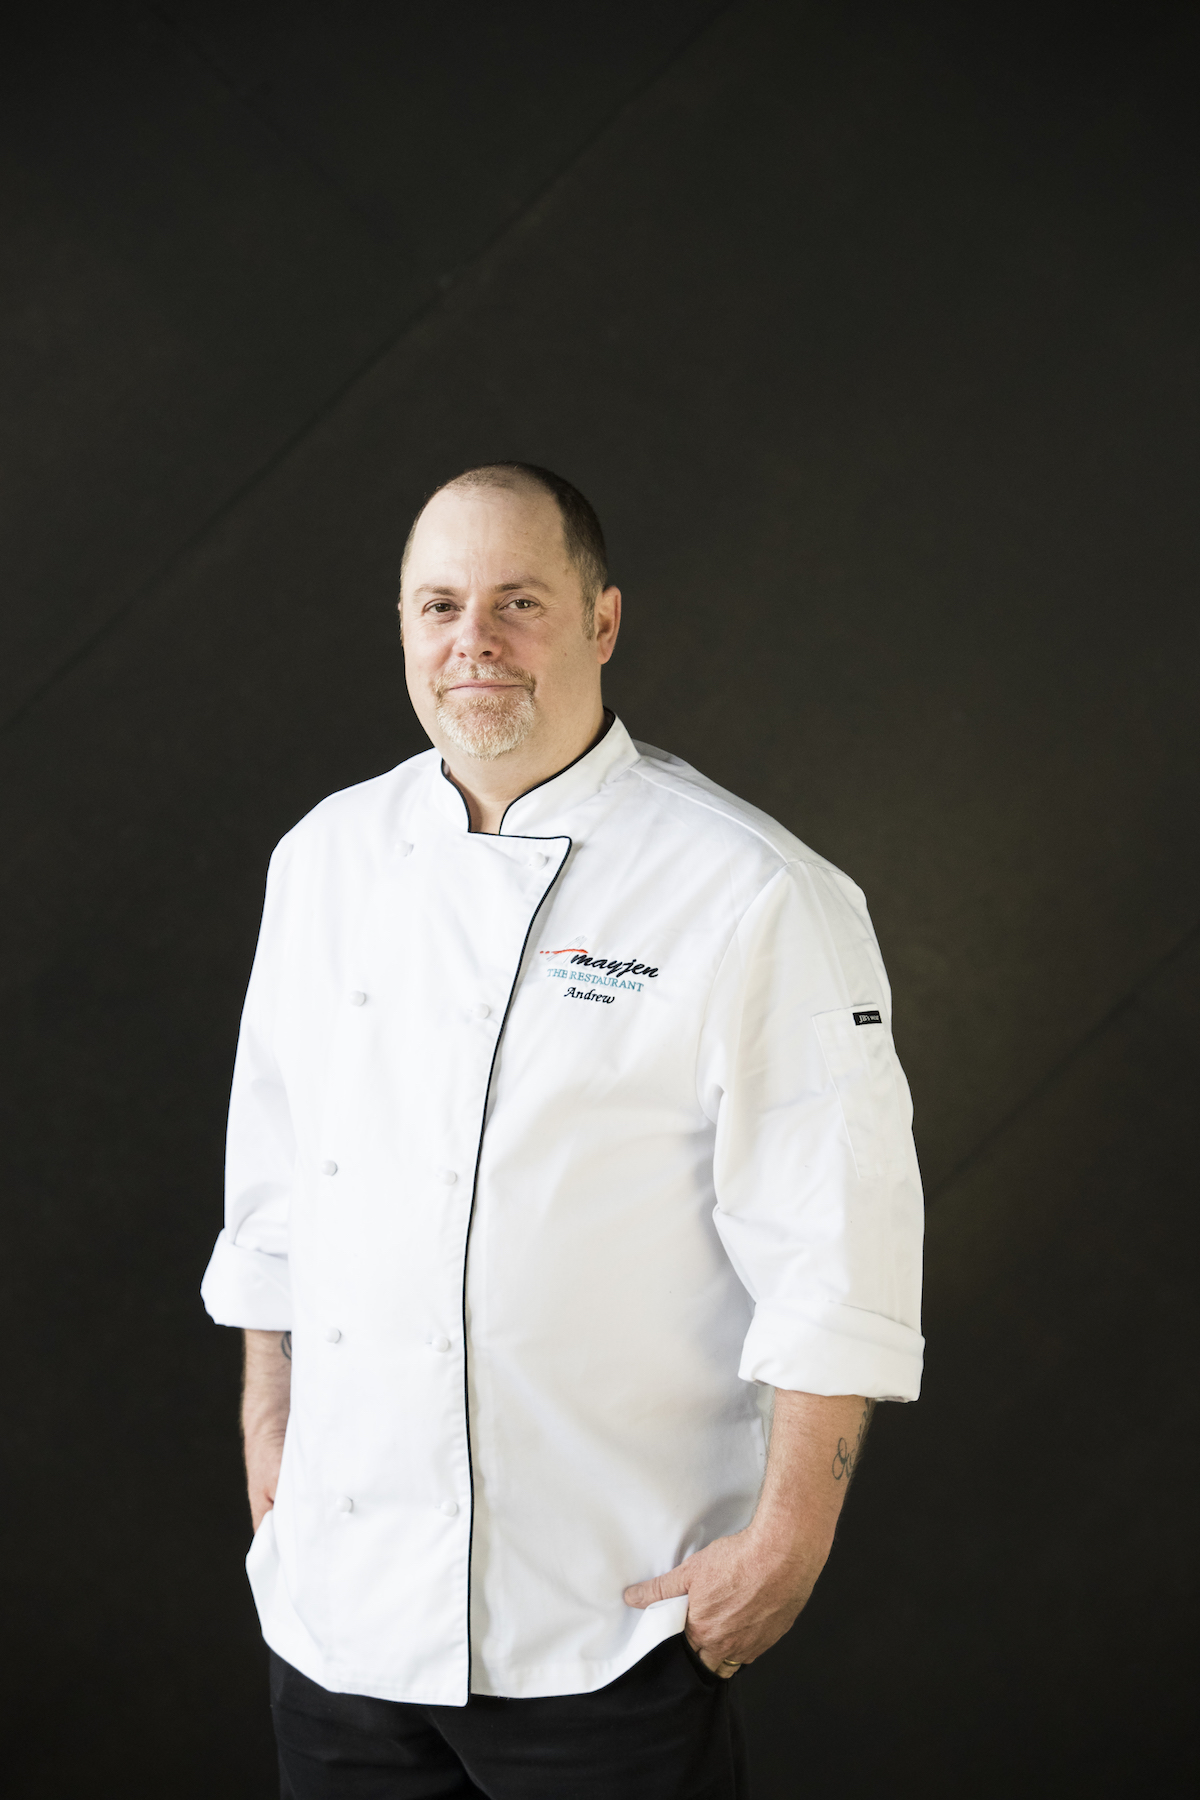 Amayjen - The Restaurant chef Andrew May